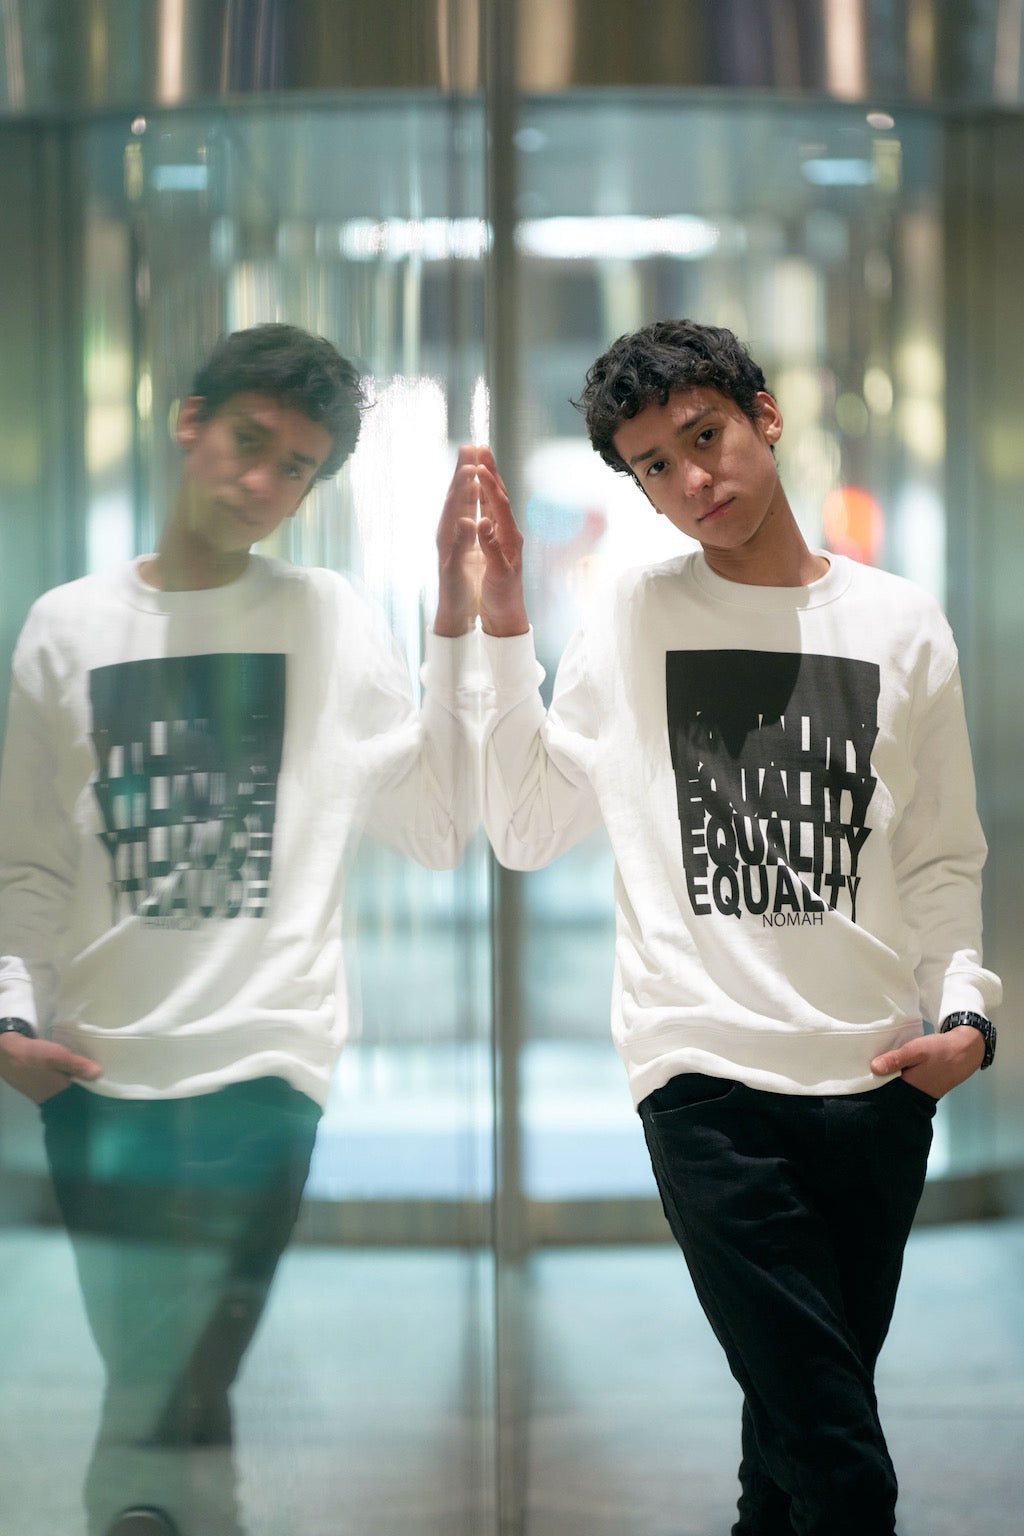 NOMAH™ - Equality Crewneck Sweatshirt